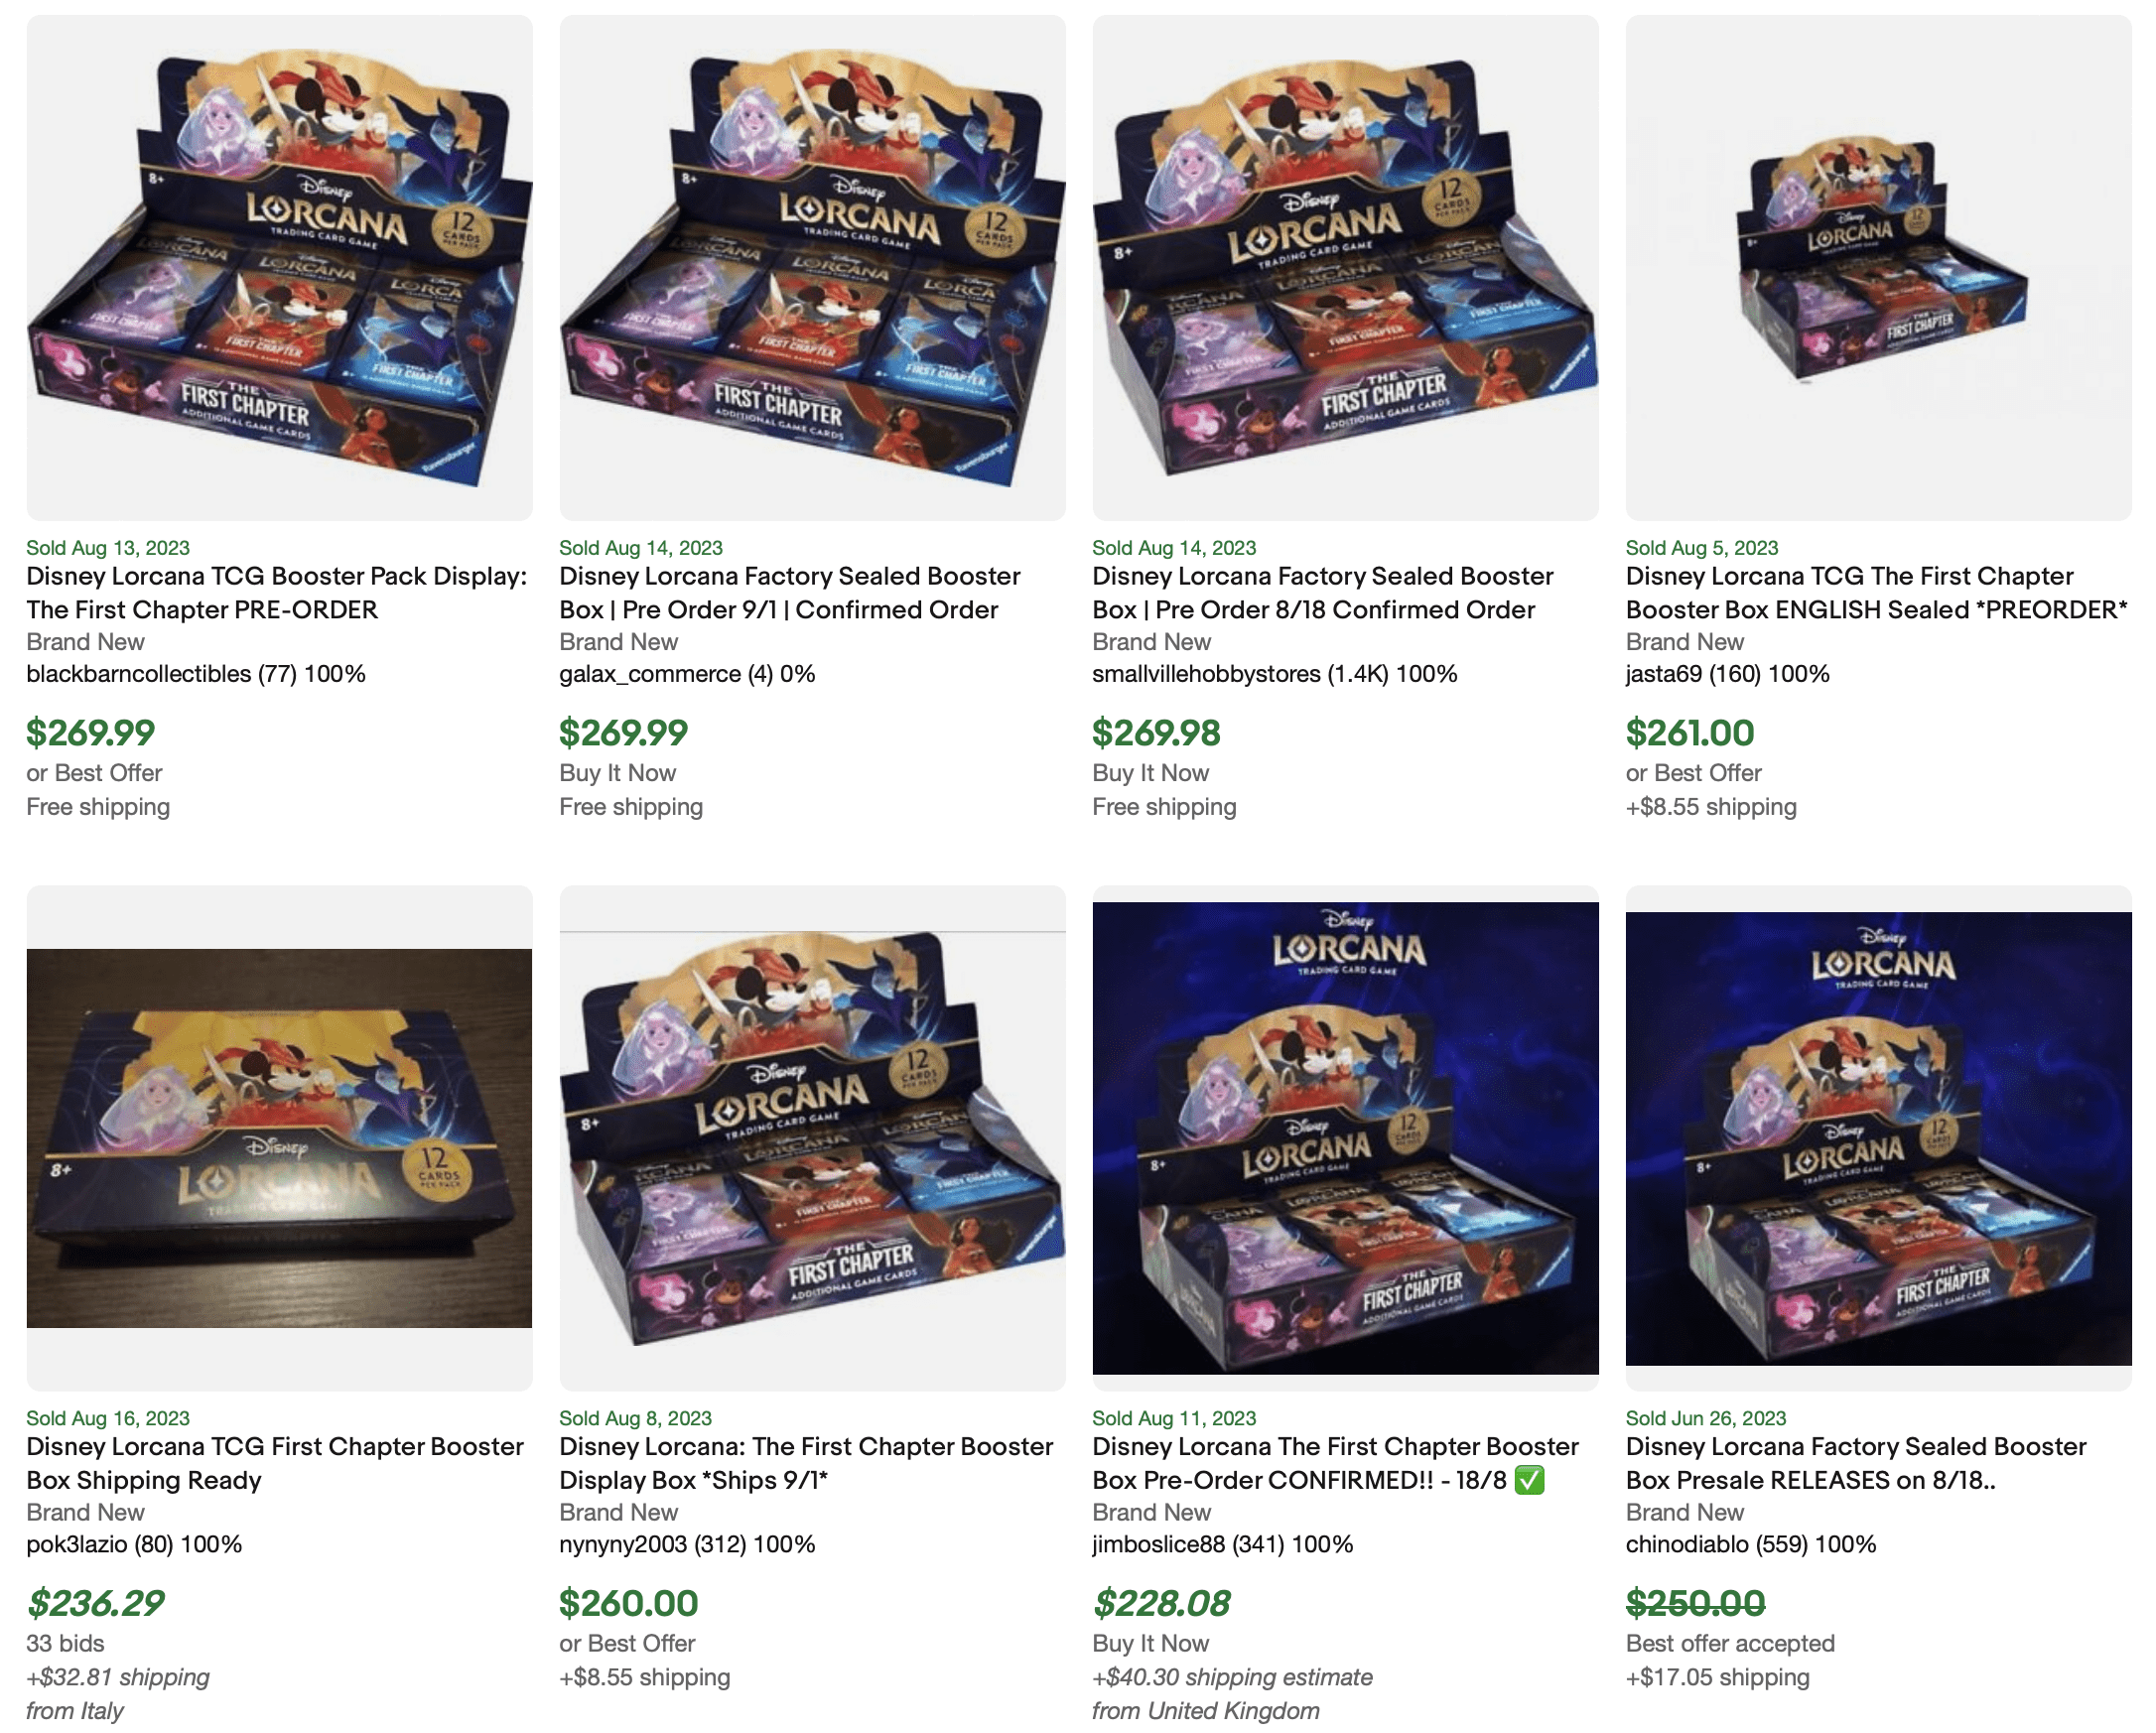 Lorcana booster box eBay sales